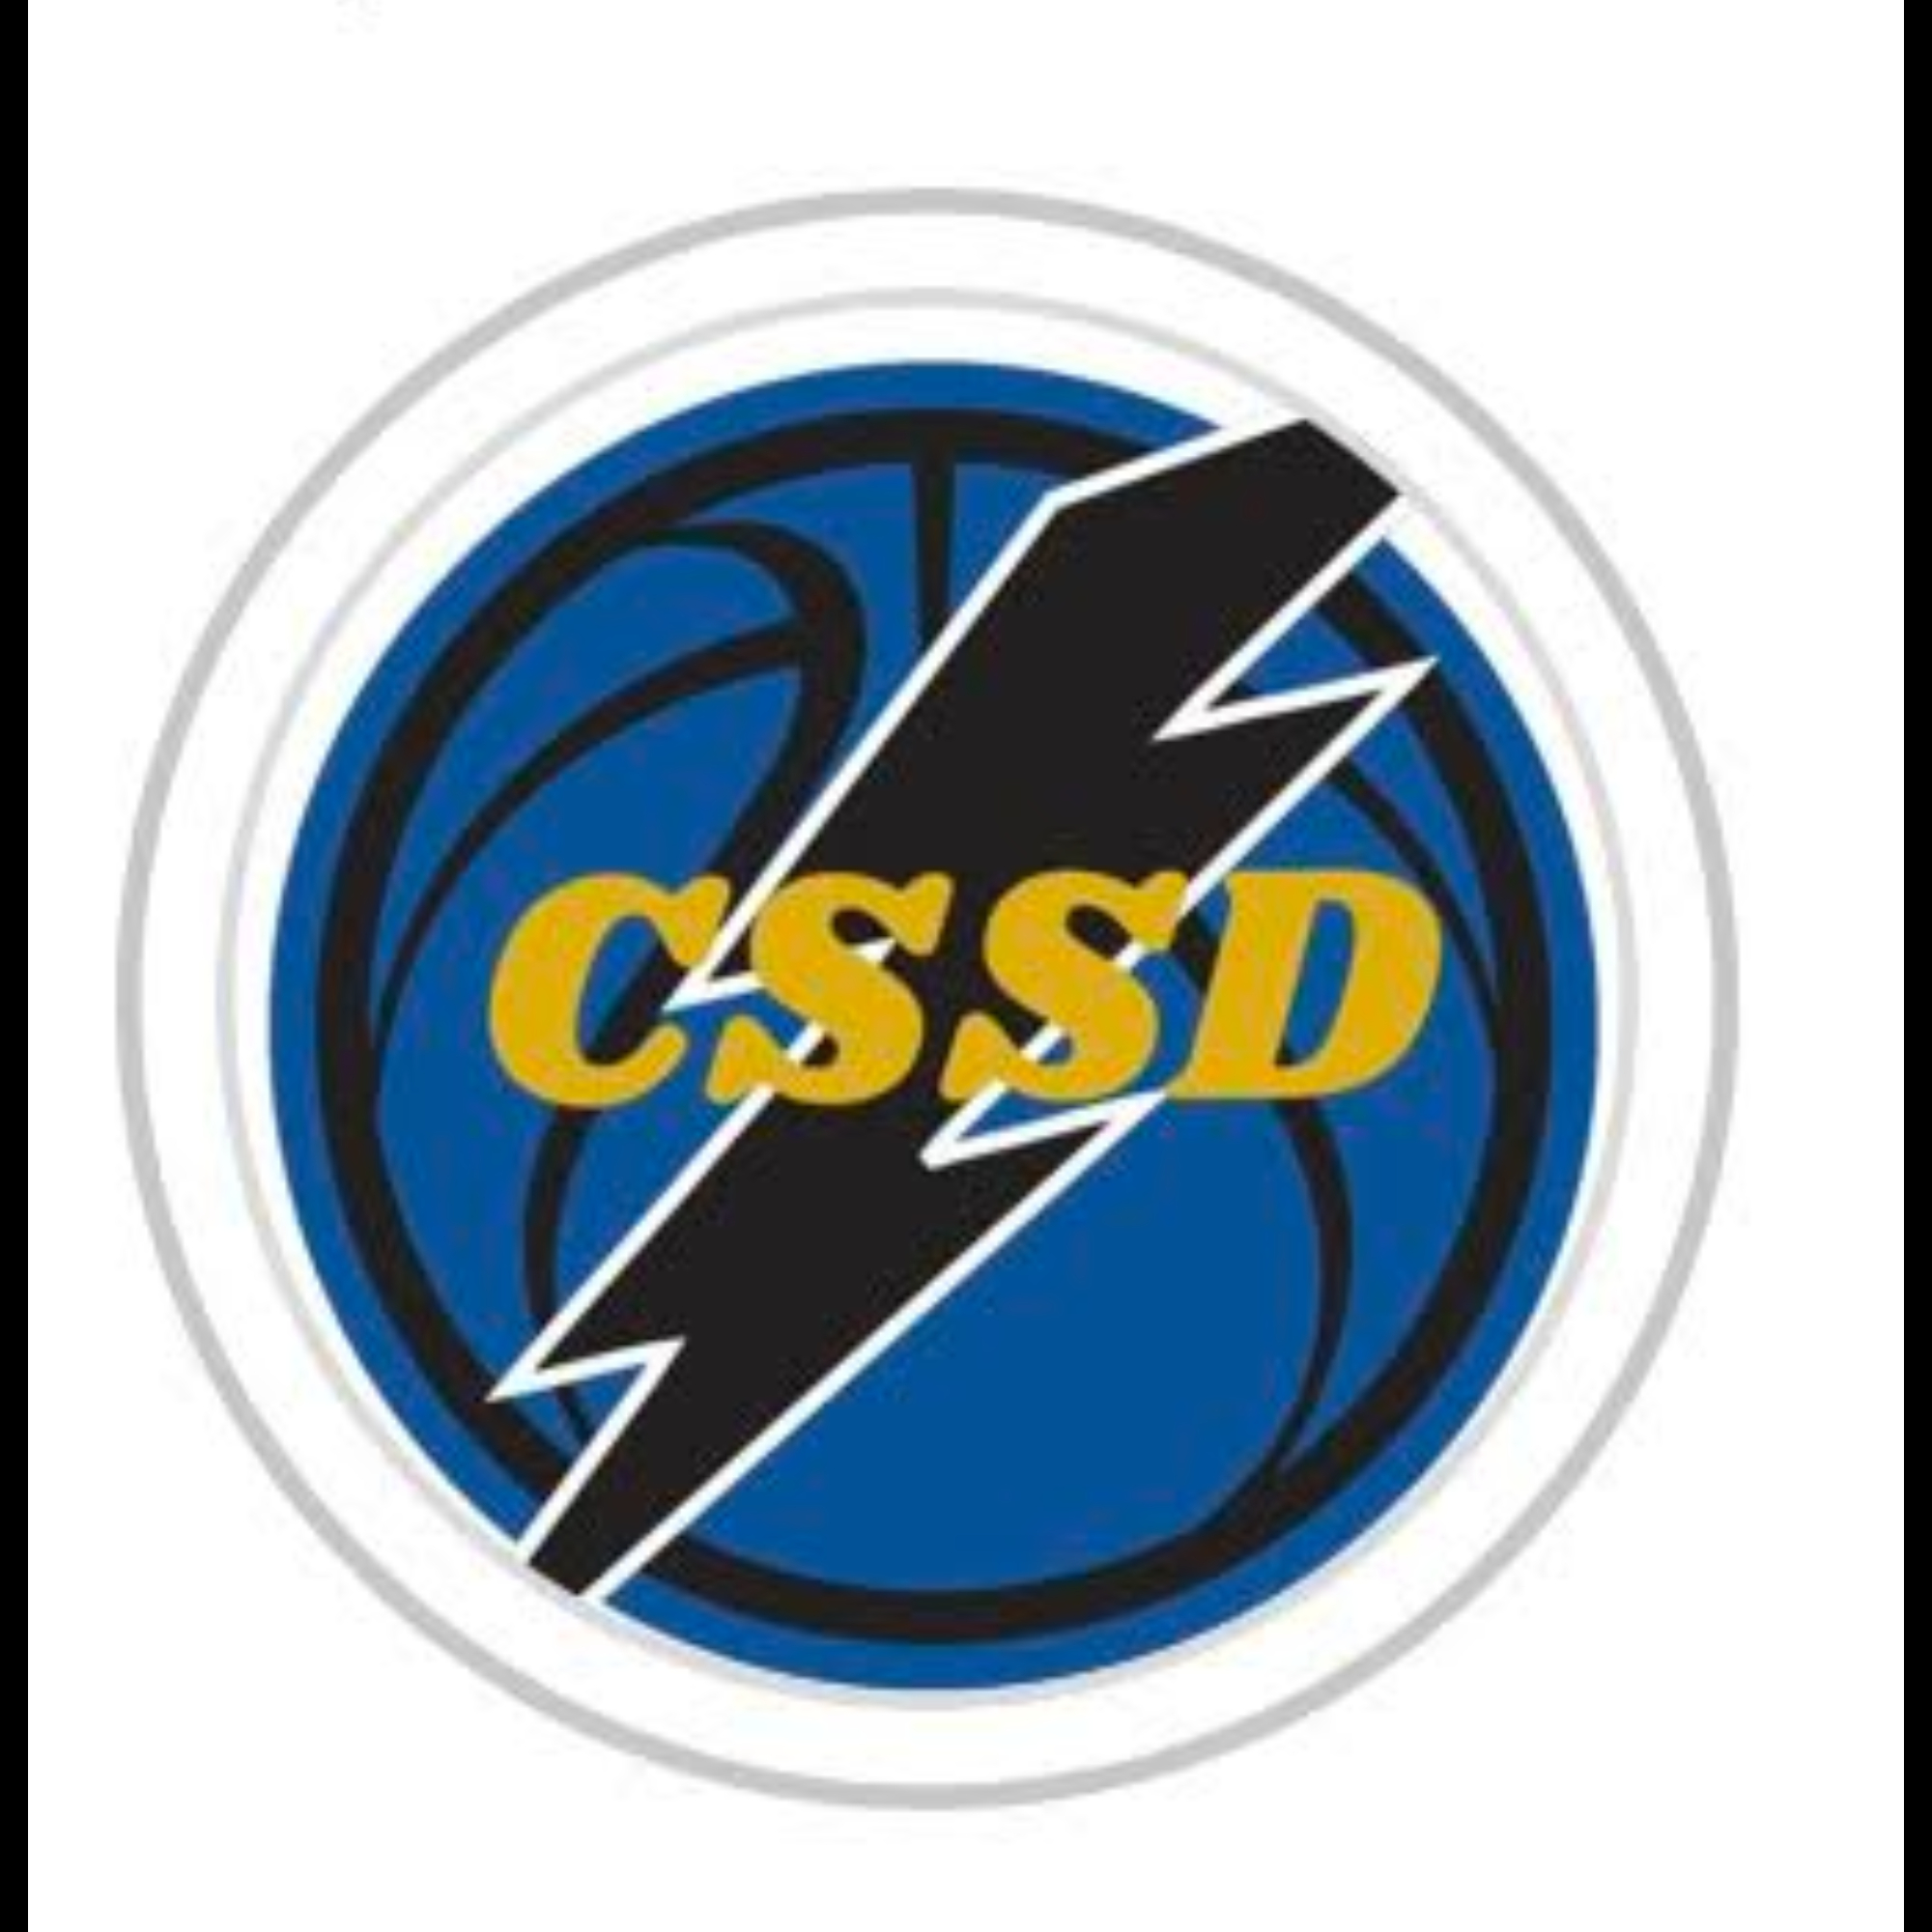 Organization logo for Cal Sparks San Diego